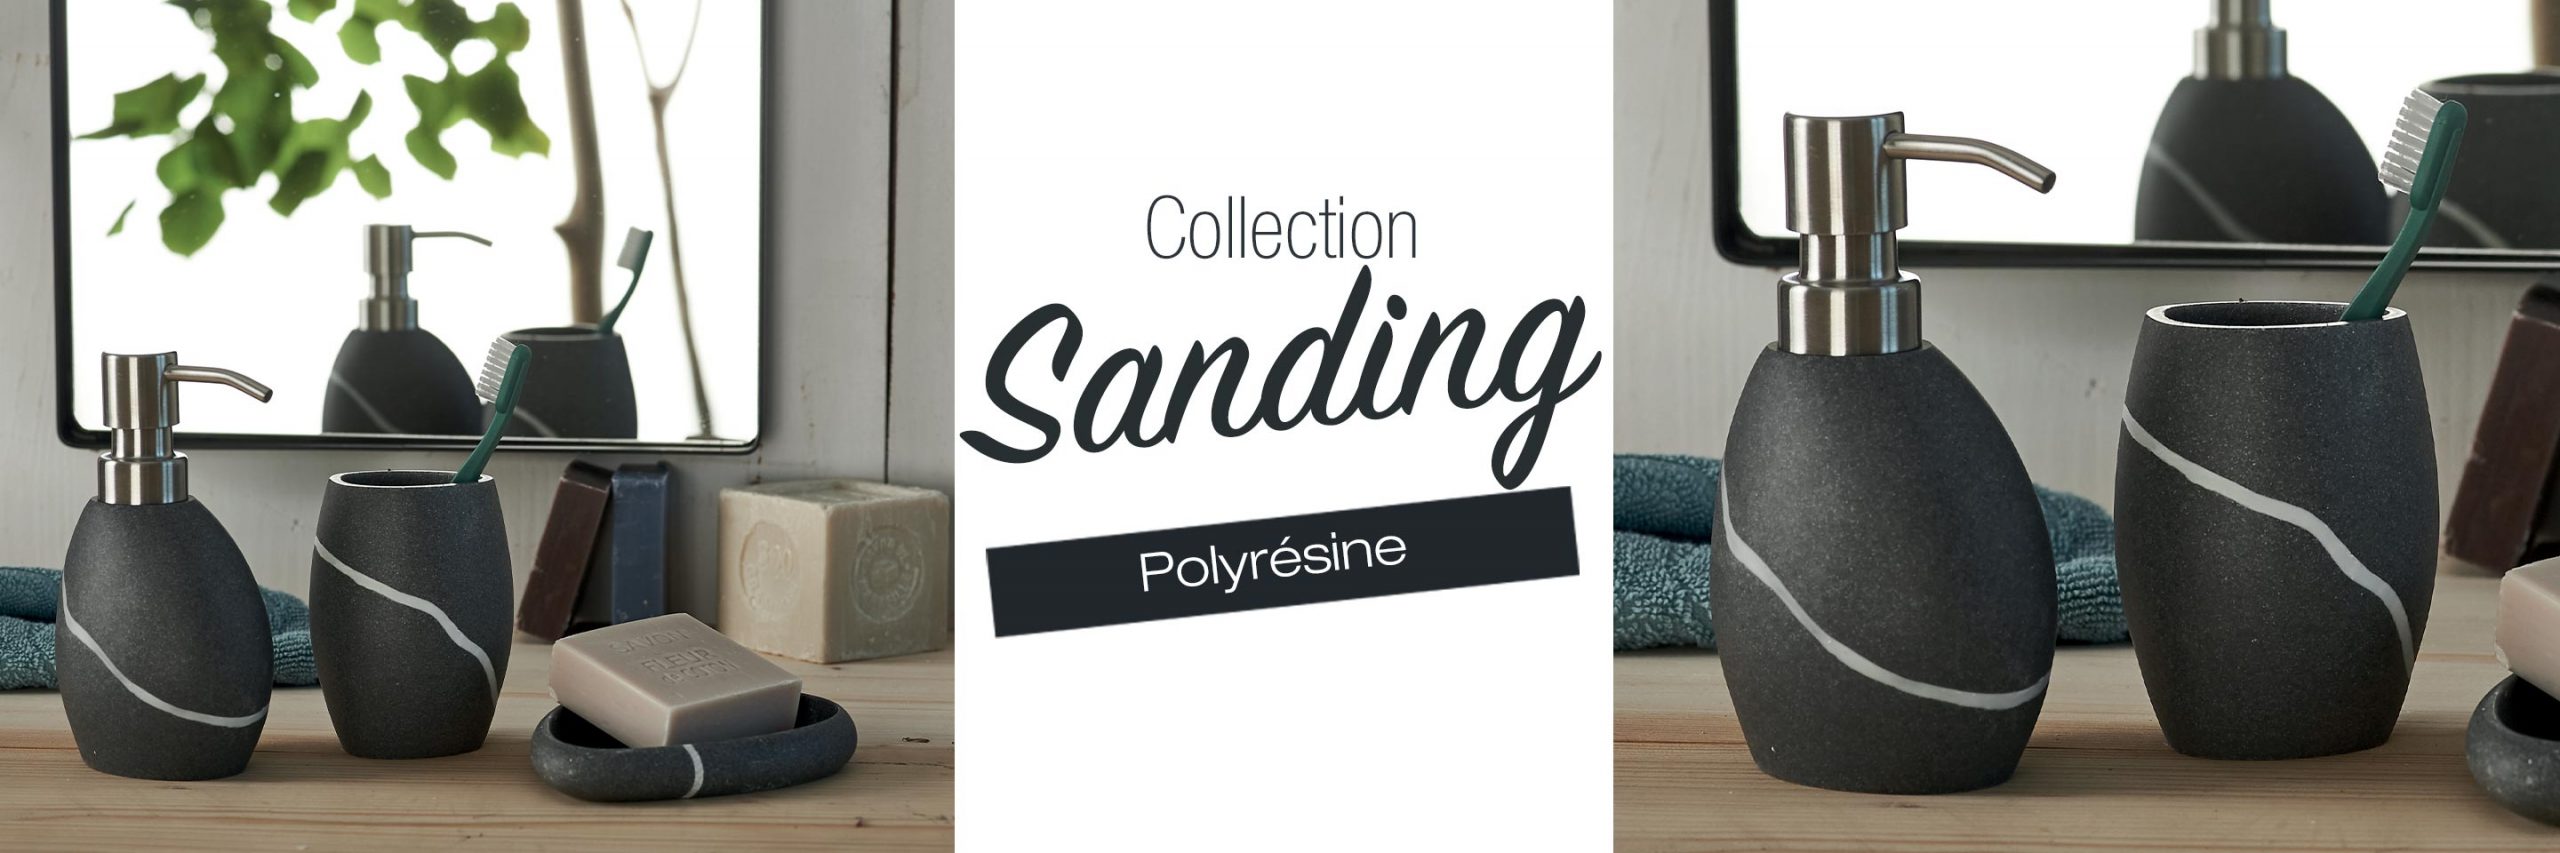 Collection SANDING polyrésine grise